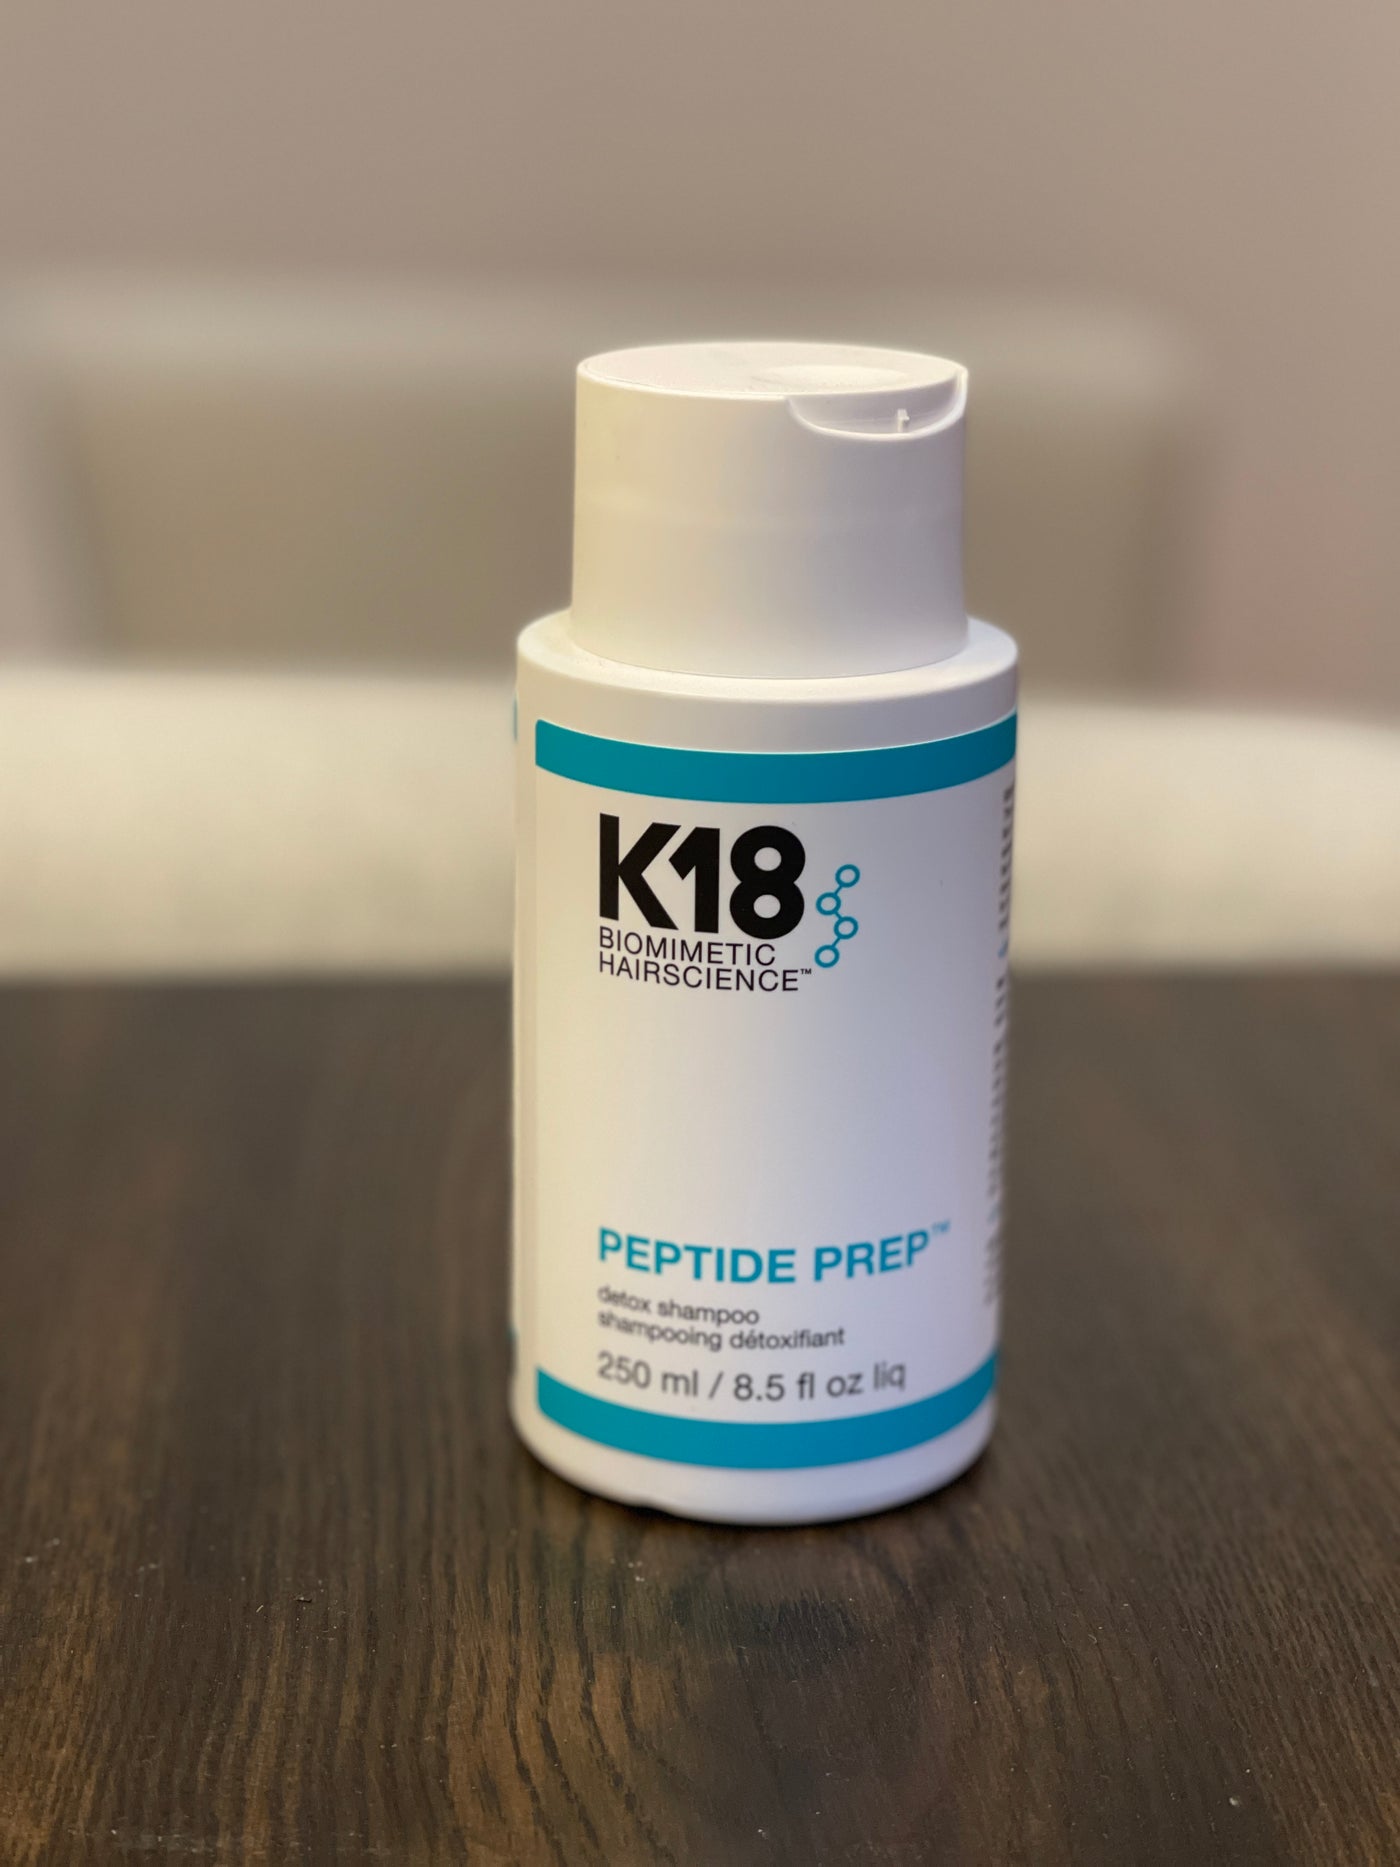 K 18 peptide prep detox shampoo